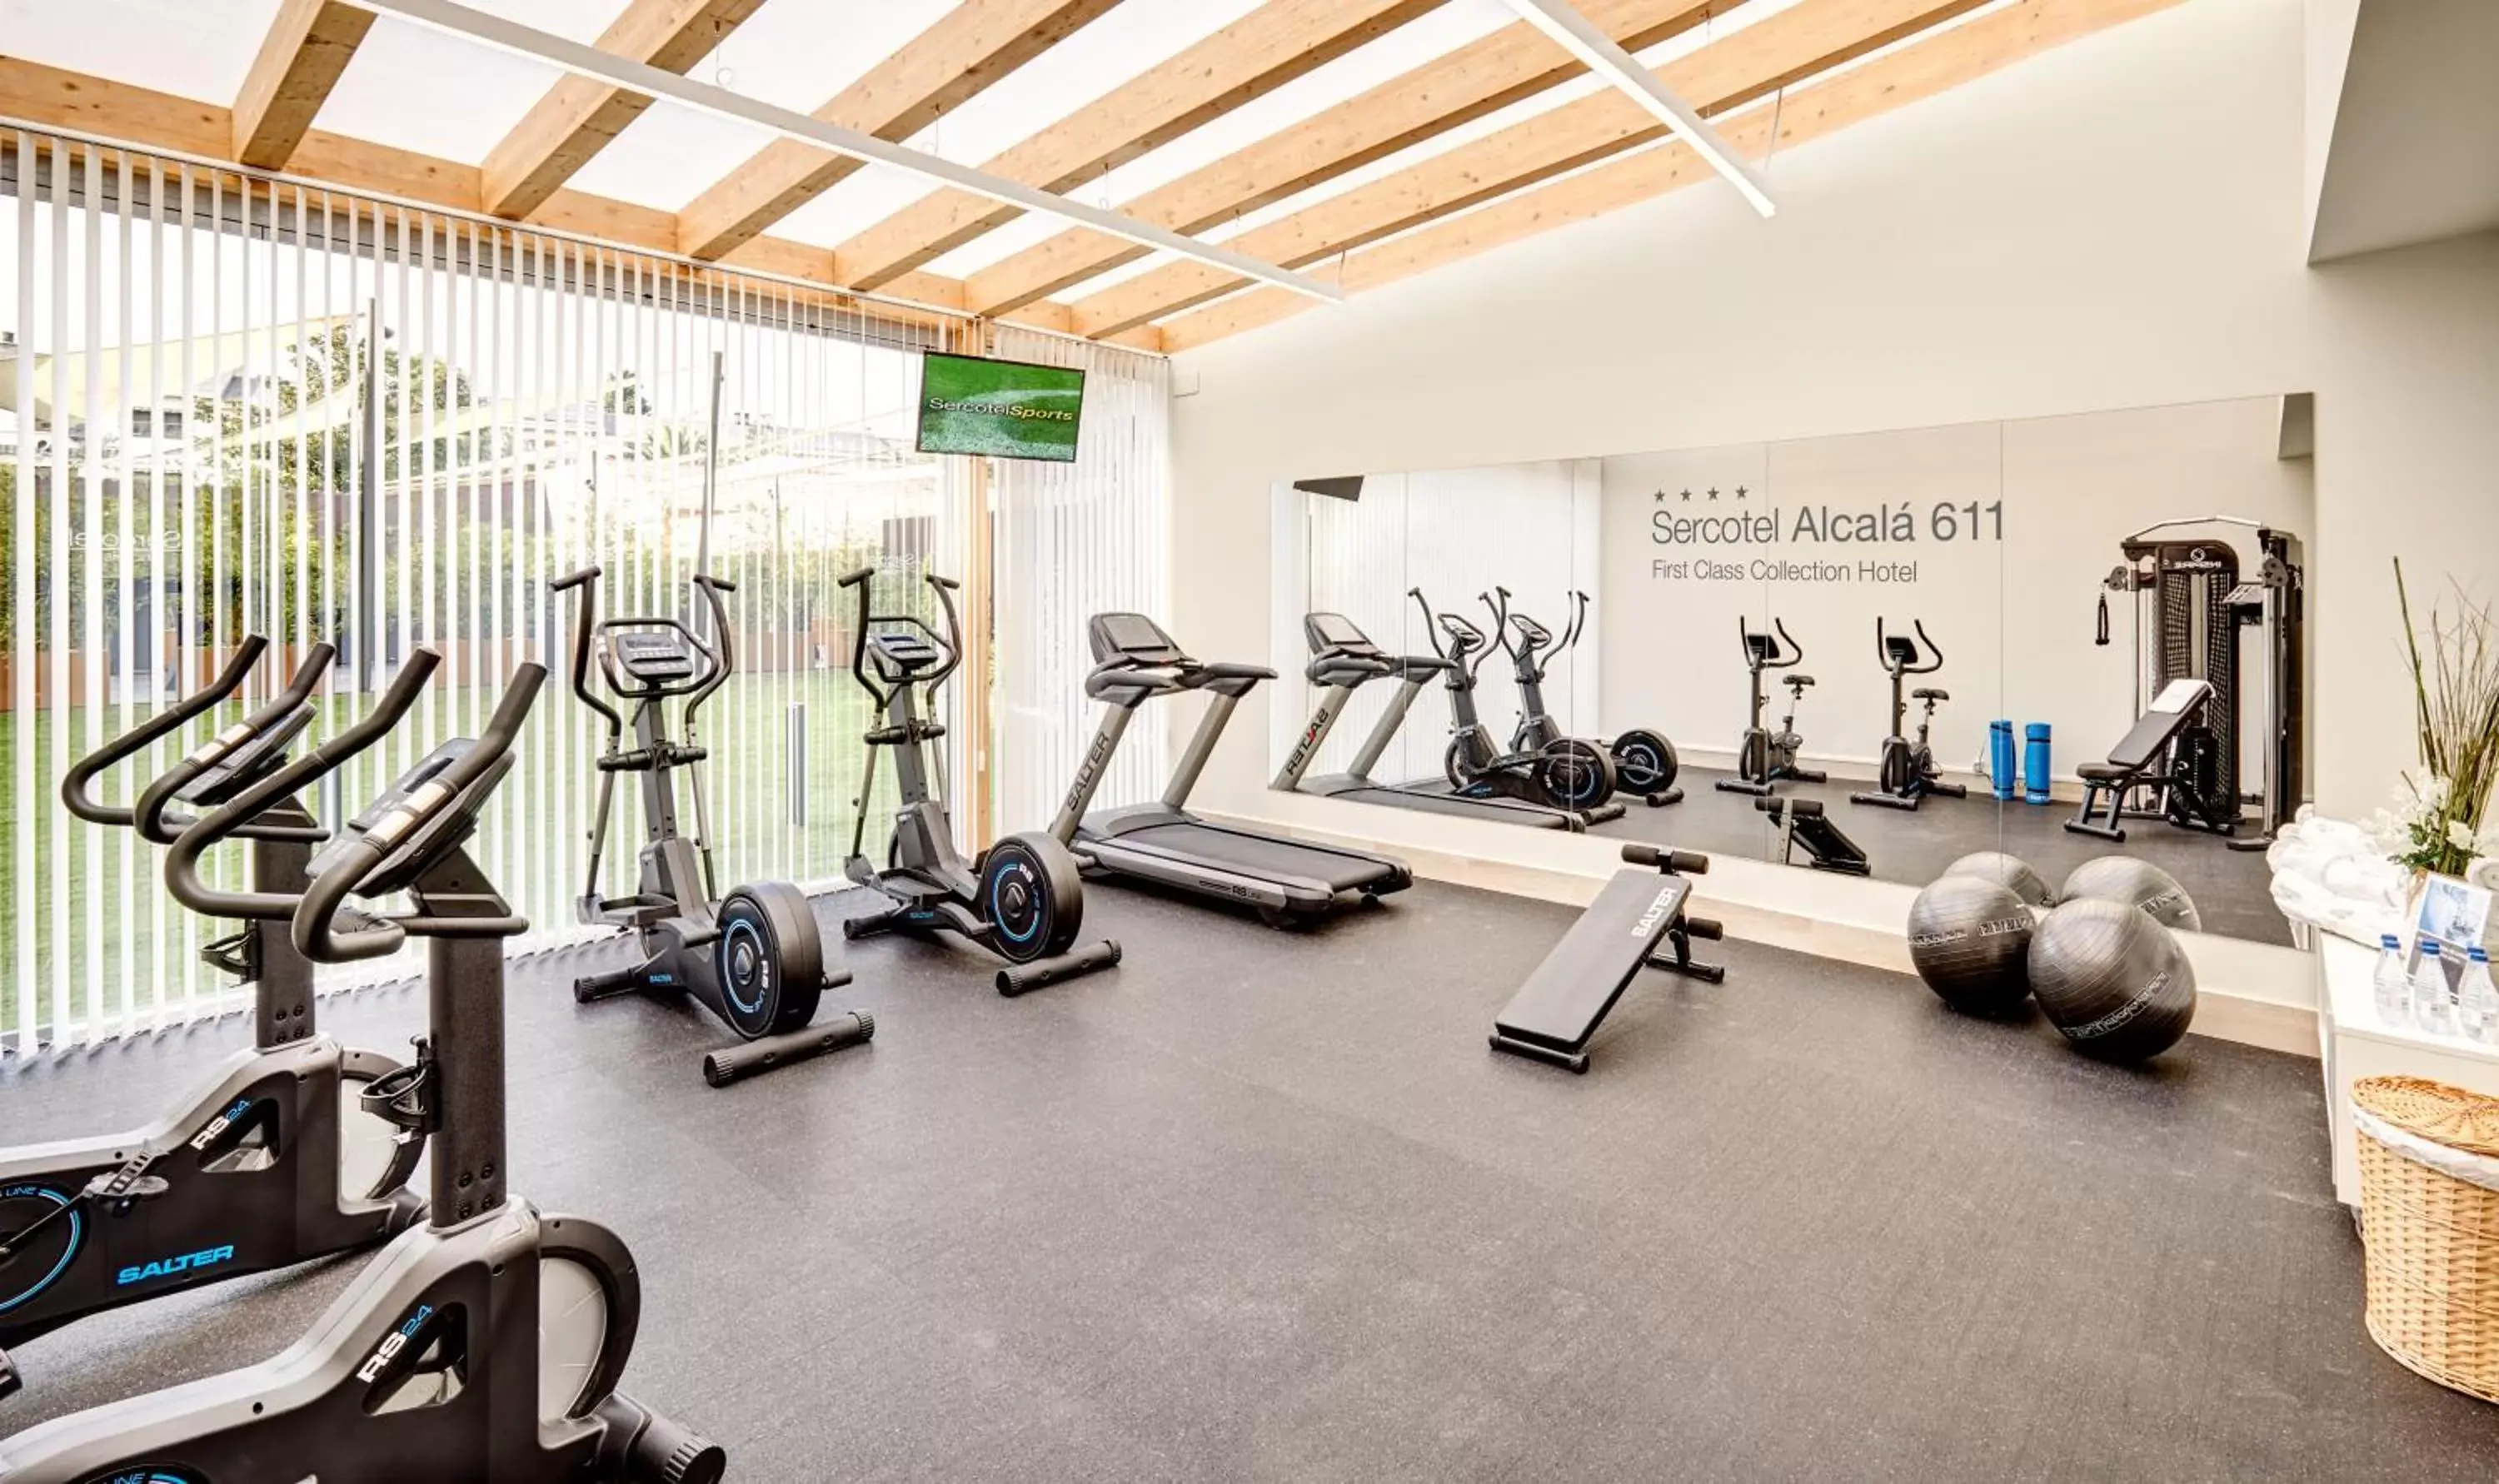 Fitness centre/facilities, Fitness Center/Facilities in Sercotel Alcalá 611